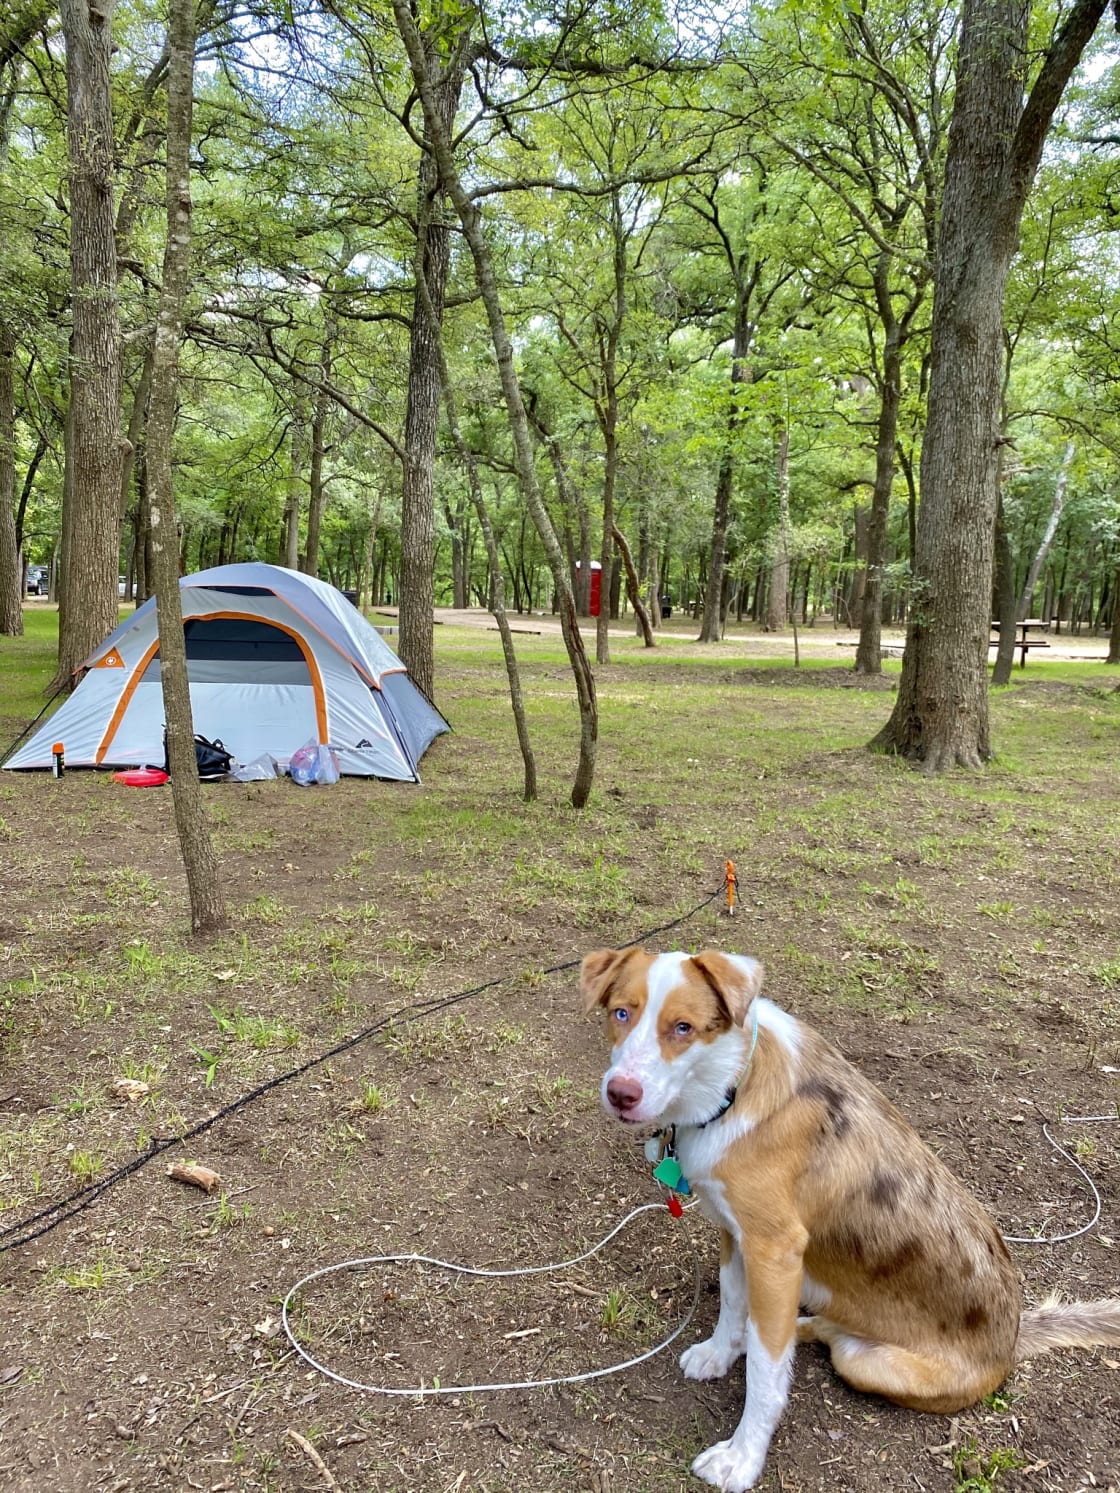 Lily enjoying her first camping trip!